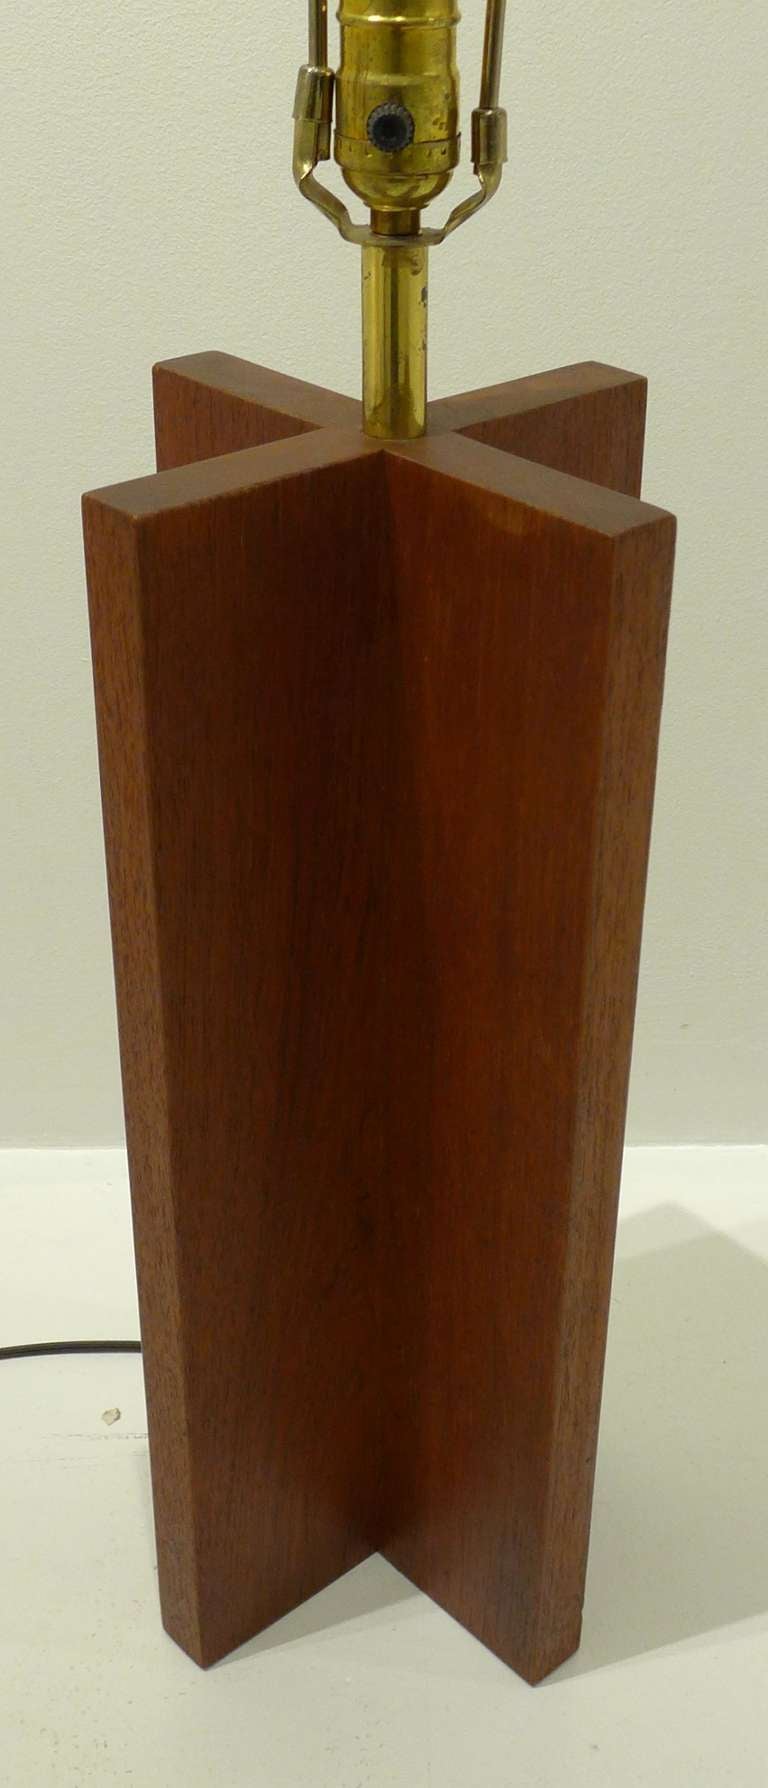 American Wooden Lamp by Vladimir Kagan